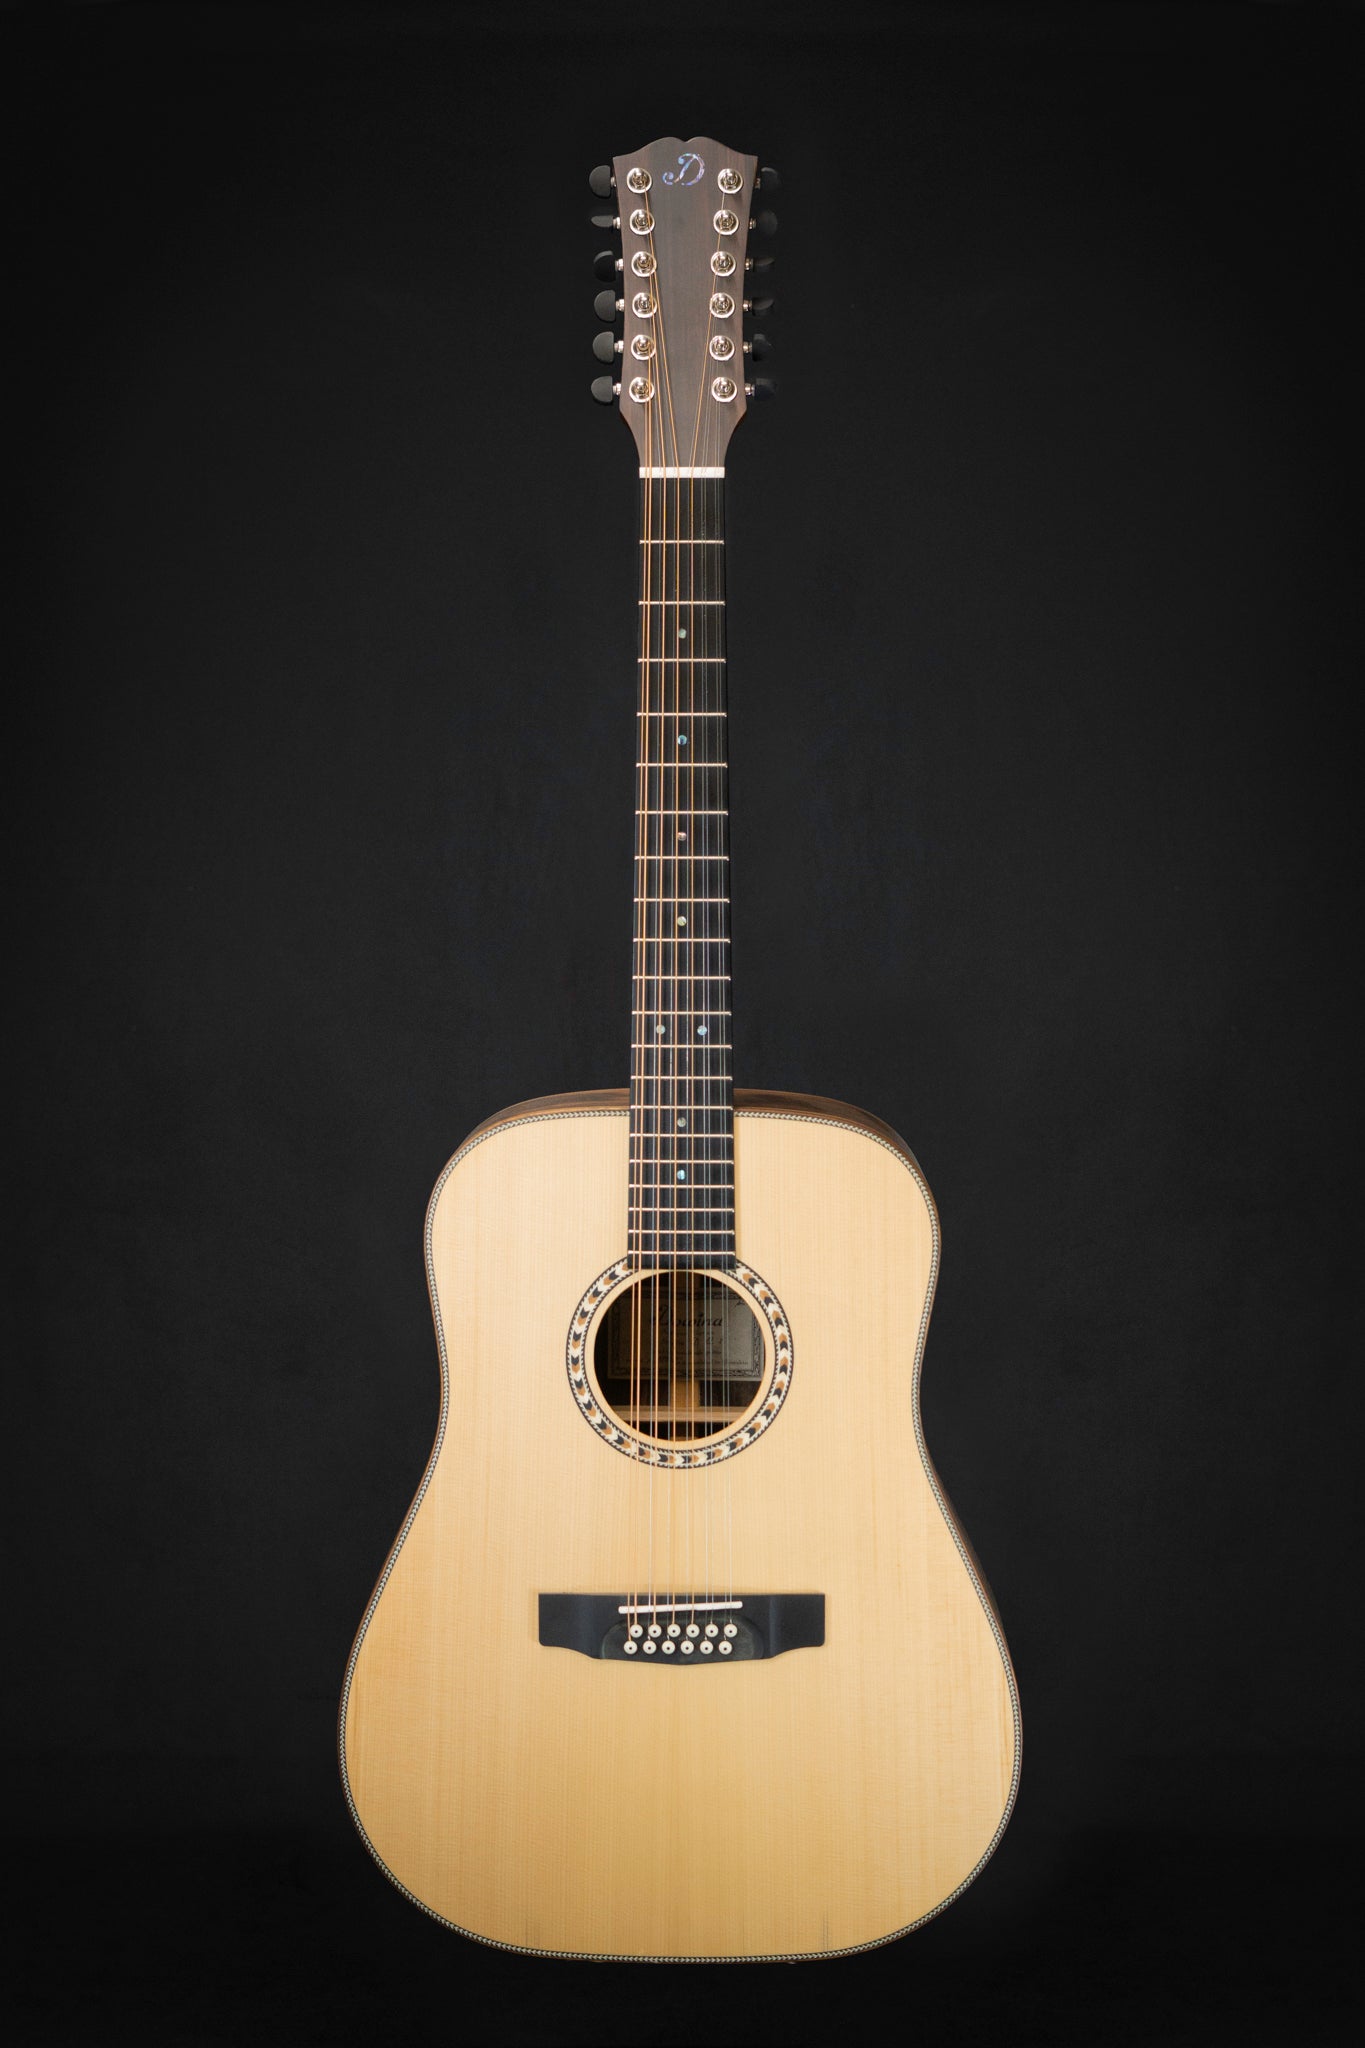 Dowina Scetis DE 12 s Acoustic Guitar Full Body Front